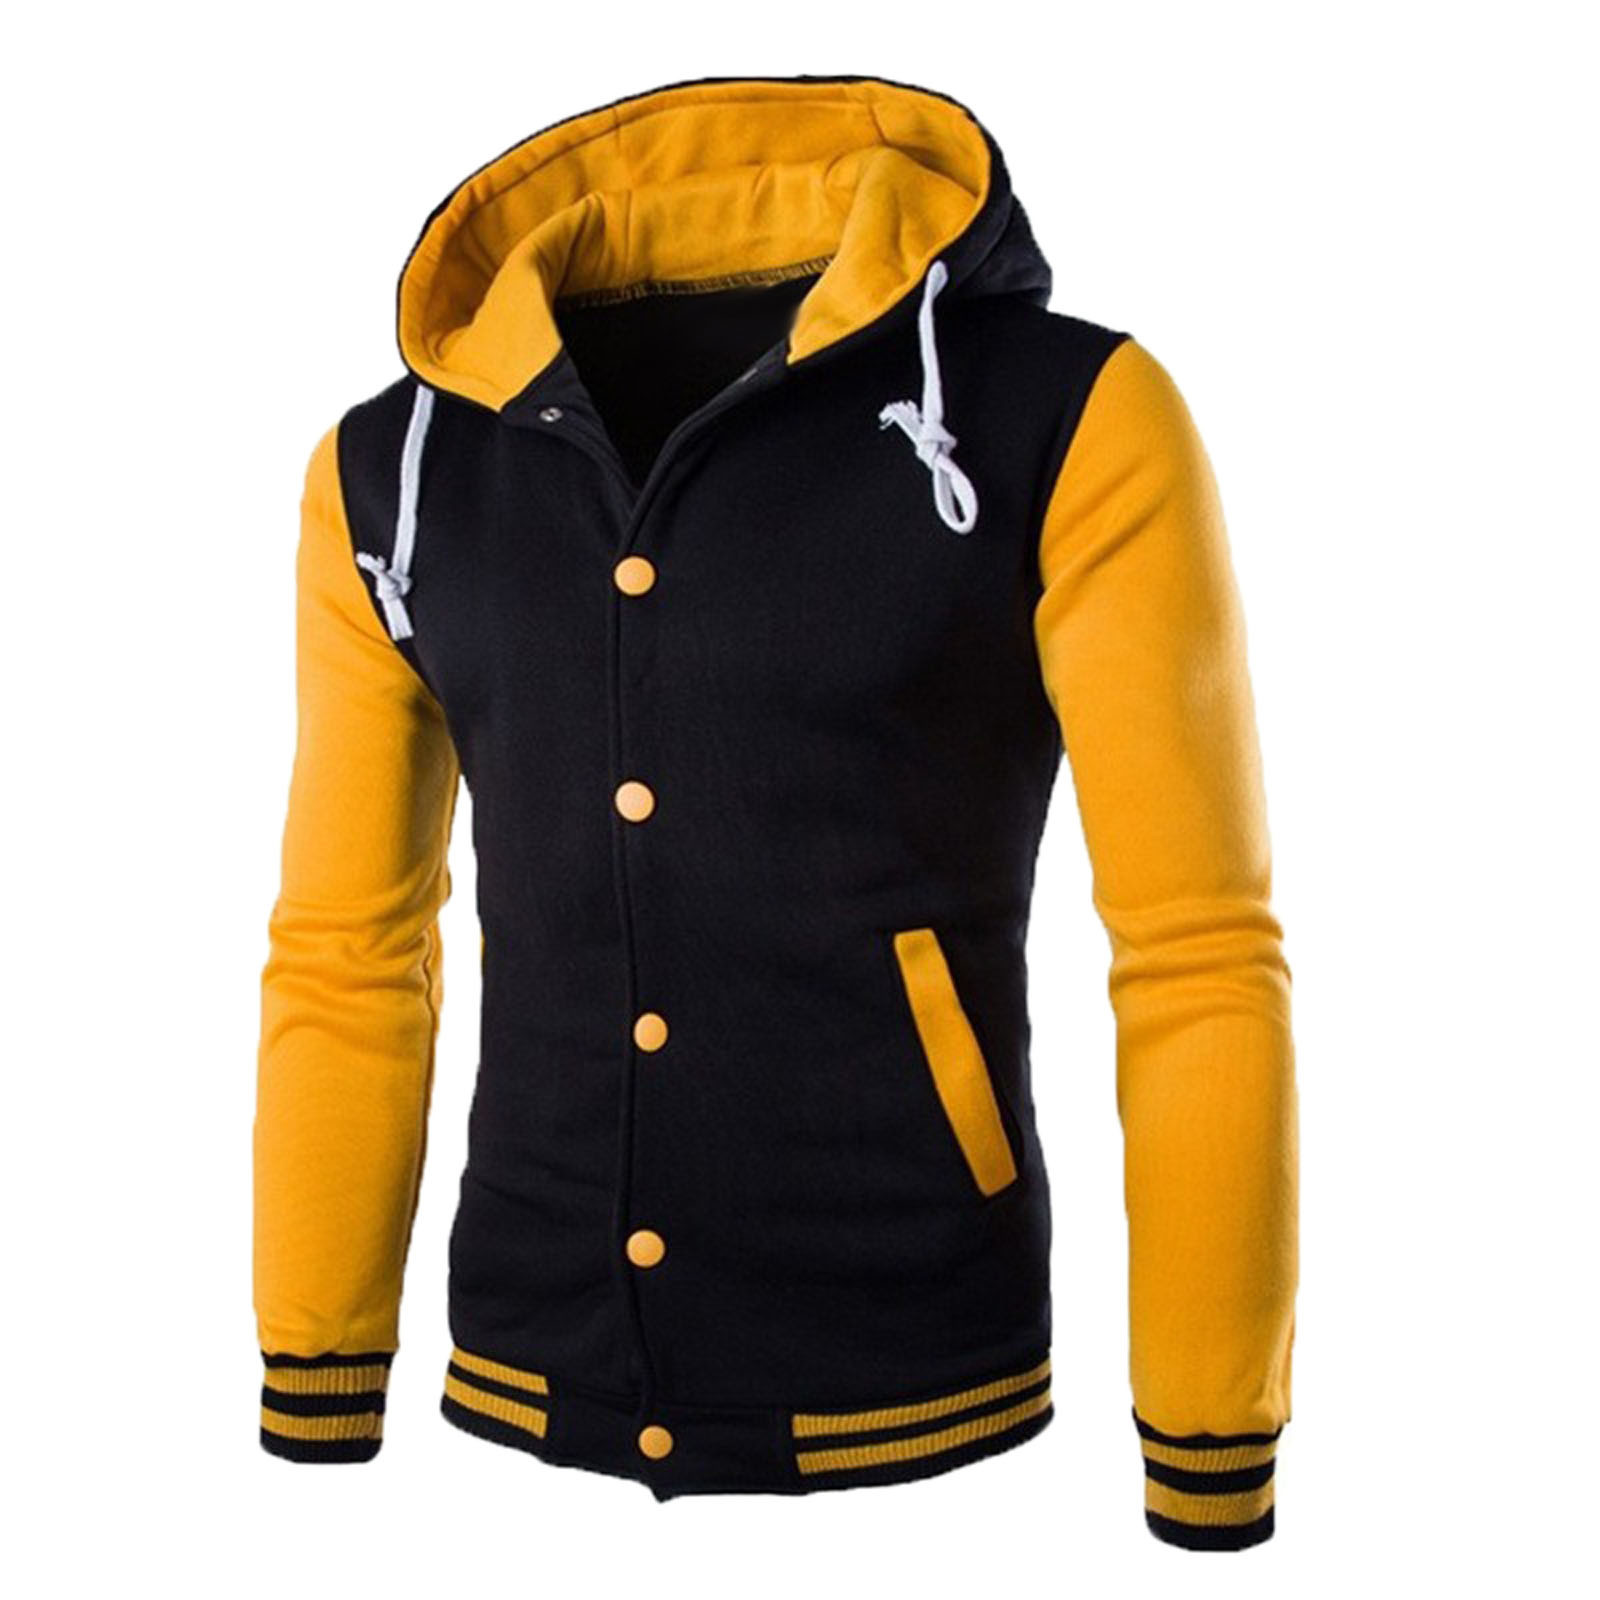 tklpehg Mens Coat Long Sleeve Coat Trendy Fashion Casual Jacket Outdoor Single-breasted Jacket Tooling Baseball Uniform Jacket Yellow XL - image 1 of 3